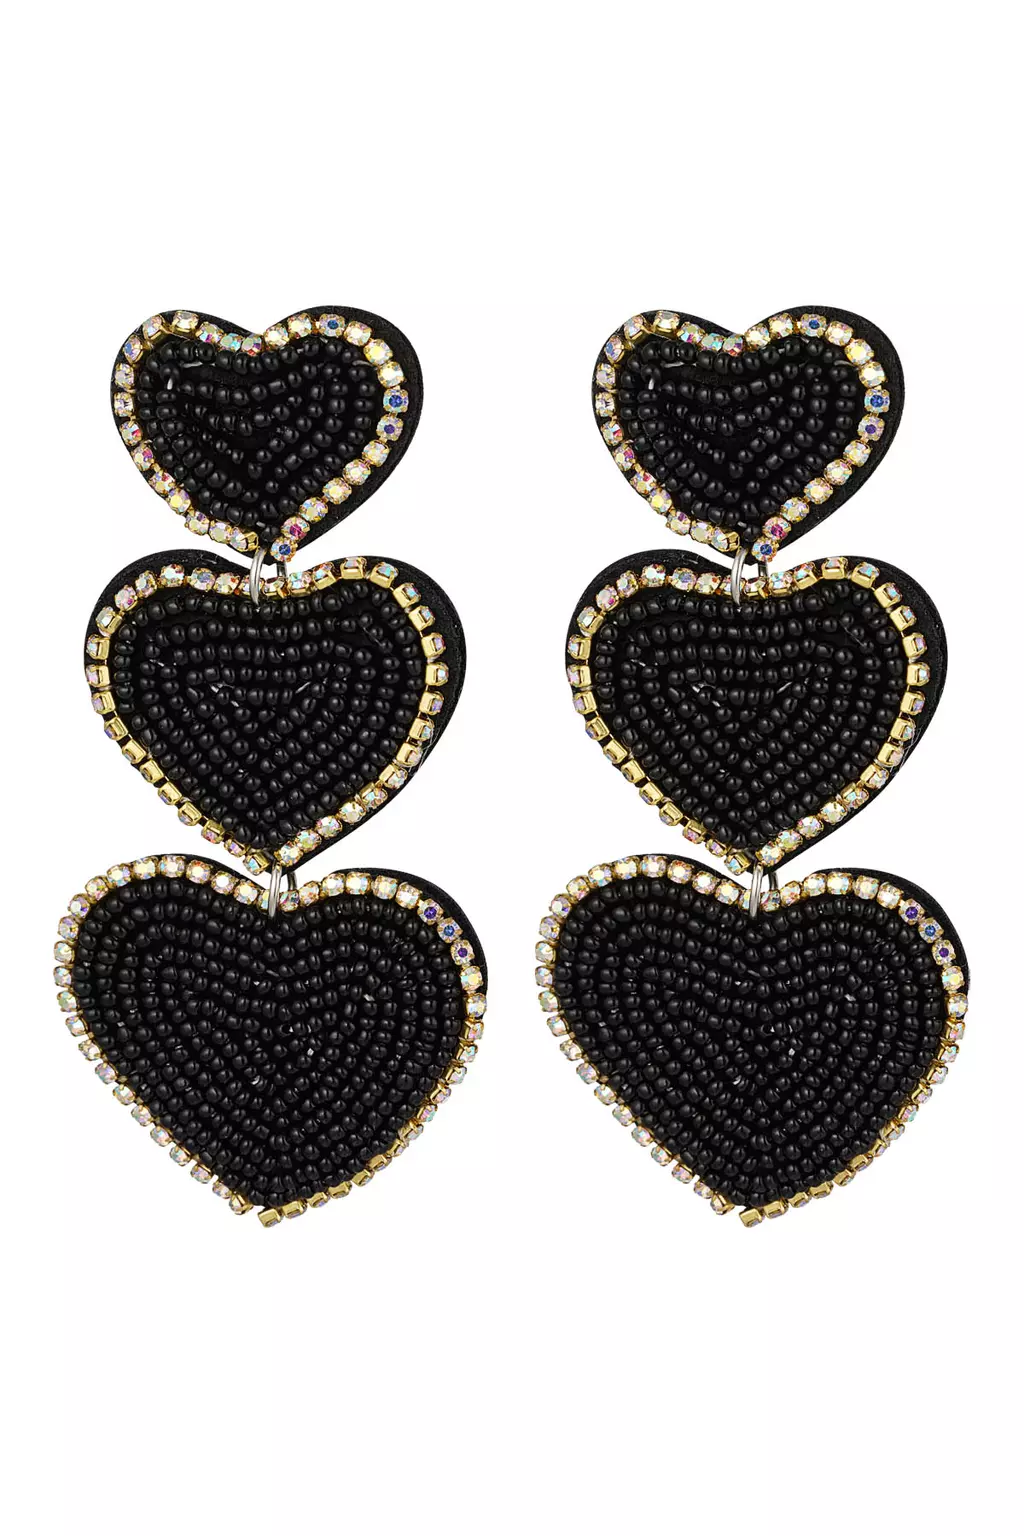 Heartbeat zwart oorbellen - fanciy.nl - waterproof - nikkel vrij - gold plated - stainless steel - goud - zilver - zwart - beaded - kralen - statement - earrings - oorbellen - zirk